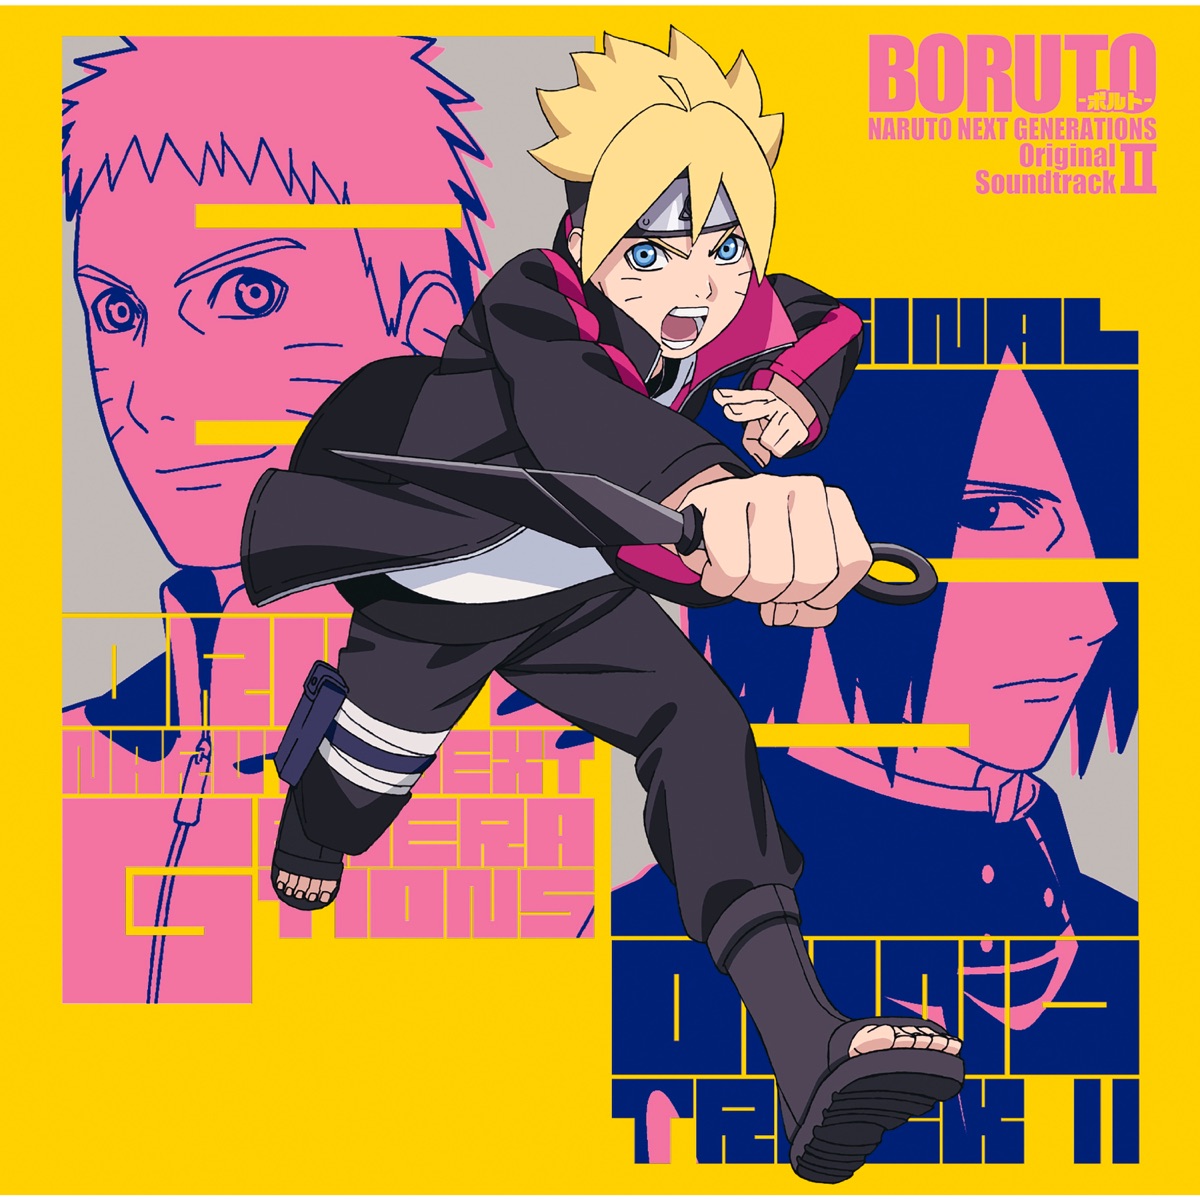 Boruto: Naruto Next Generations Original Soundtrack Vol 2 (Playlist) 